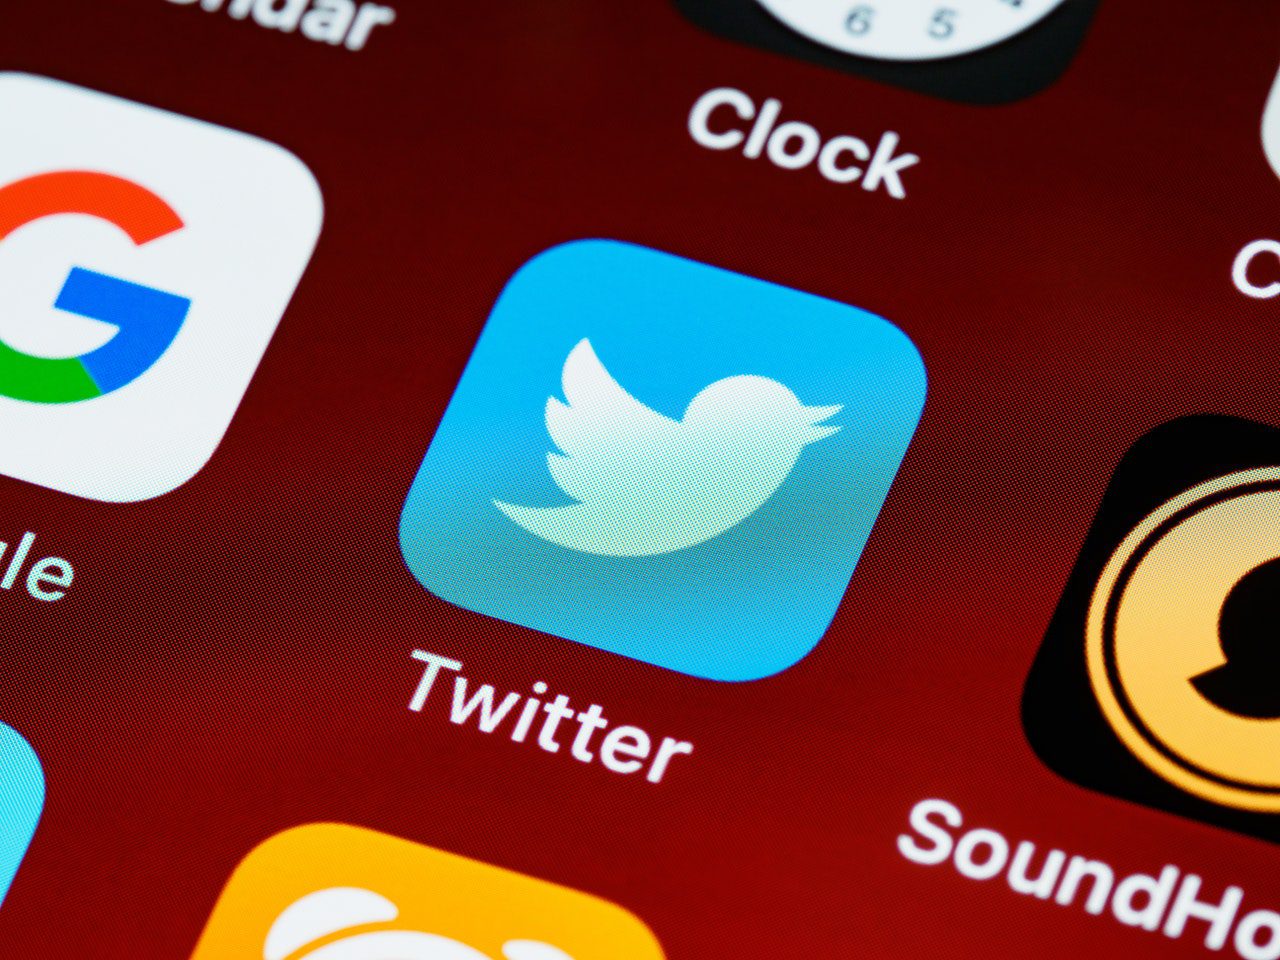 Cash, not simply free speech, the top recreation of Twitter bid